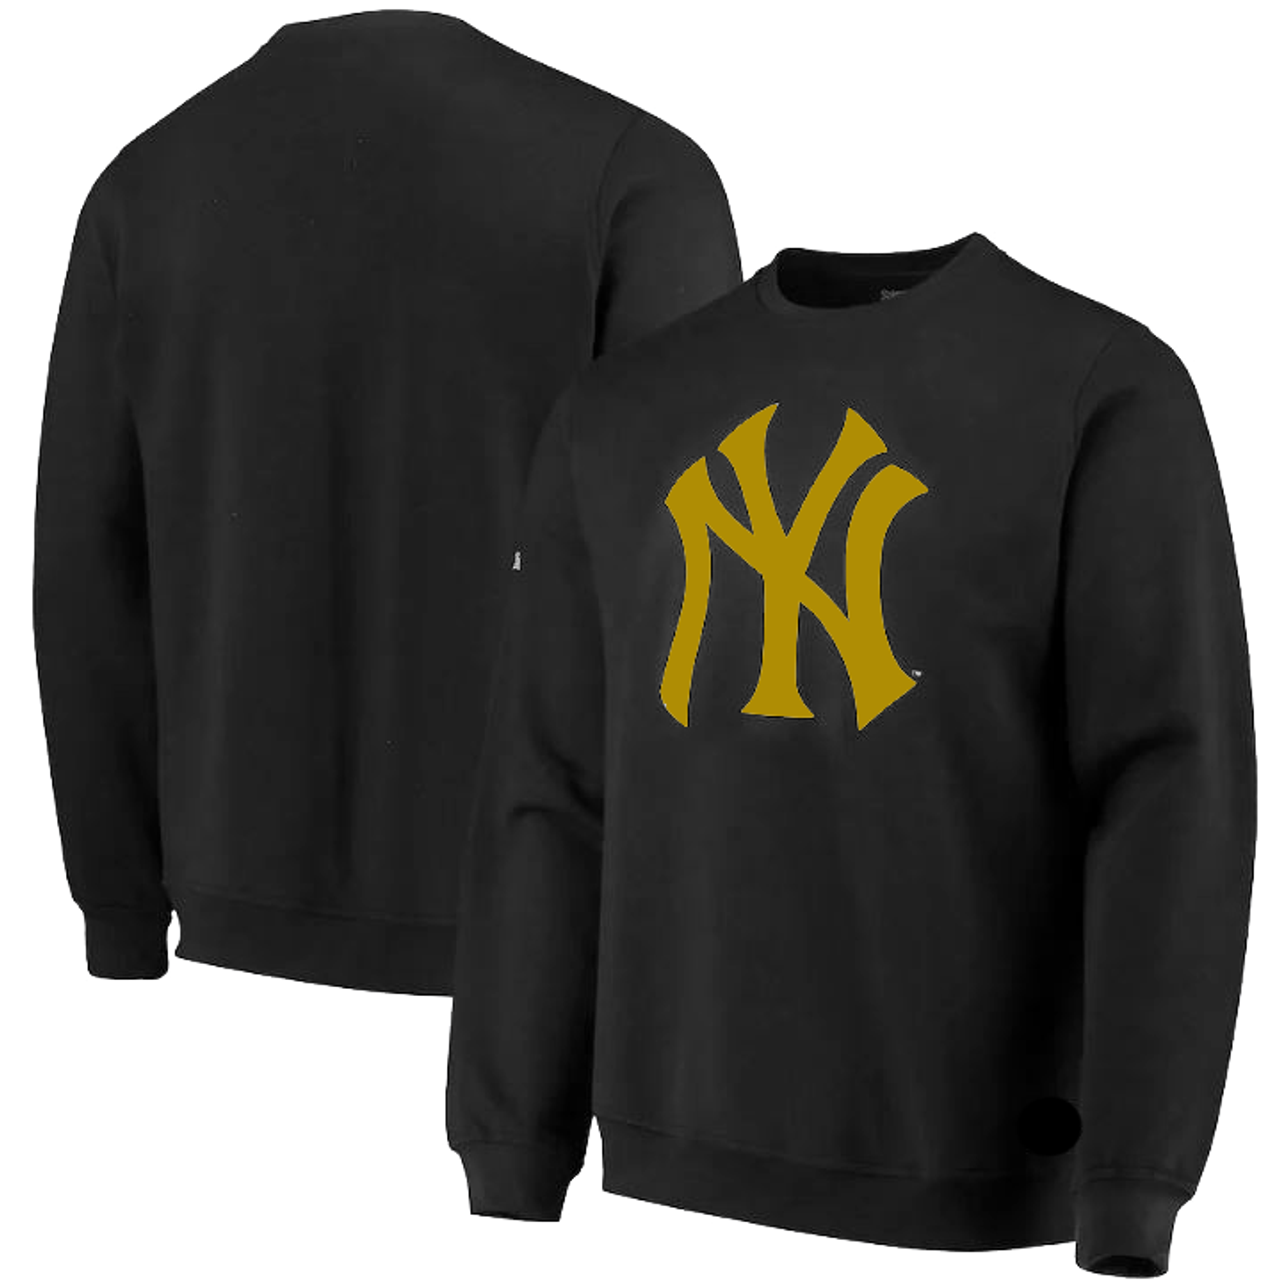 Yankees Primary Logo Crewneck Sweatshirt - Black and Gold